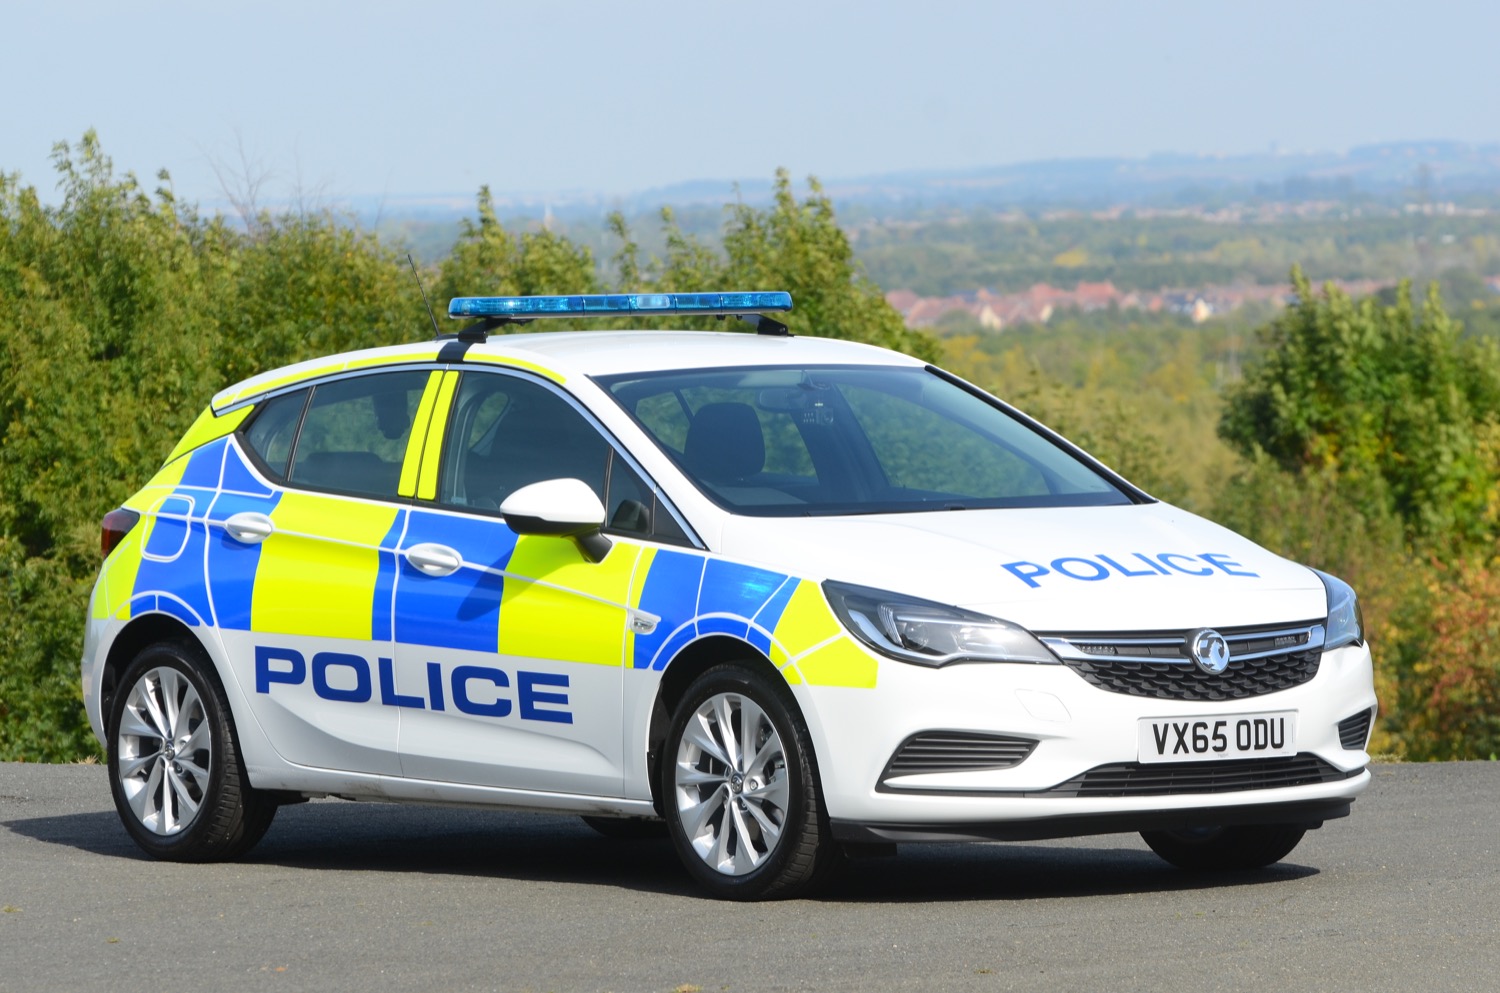 2016 Vauxhall Astra Hatchback  UK Police Car  GM Authority